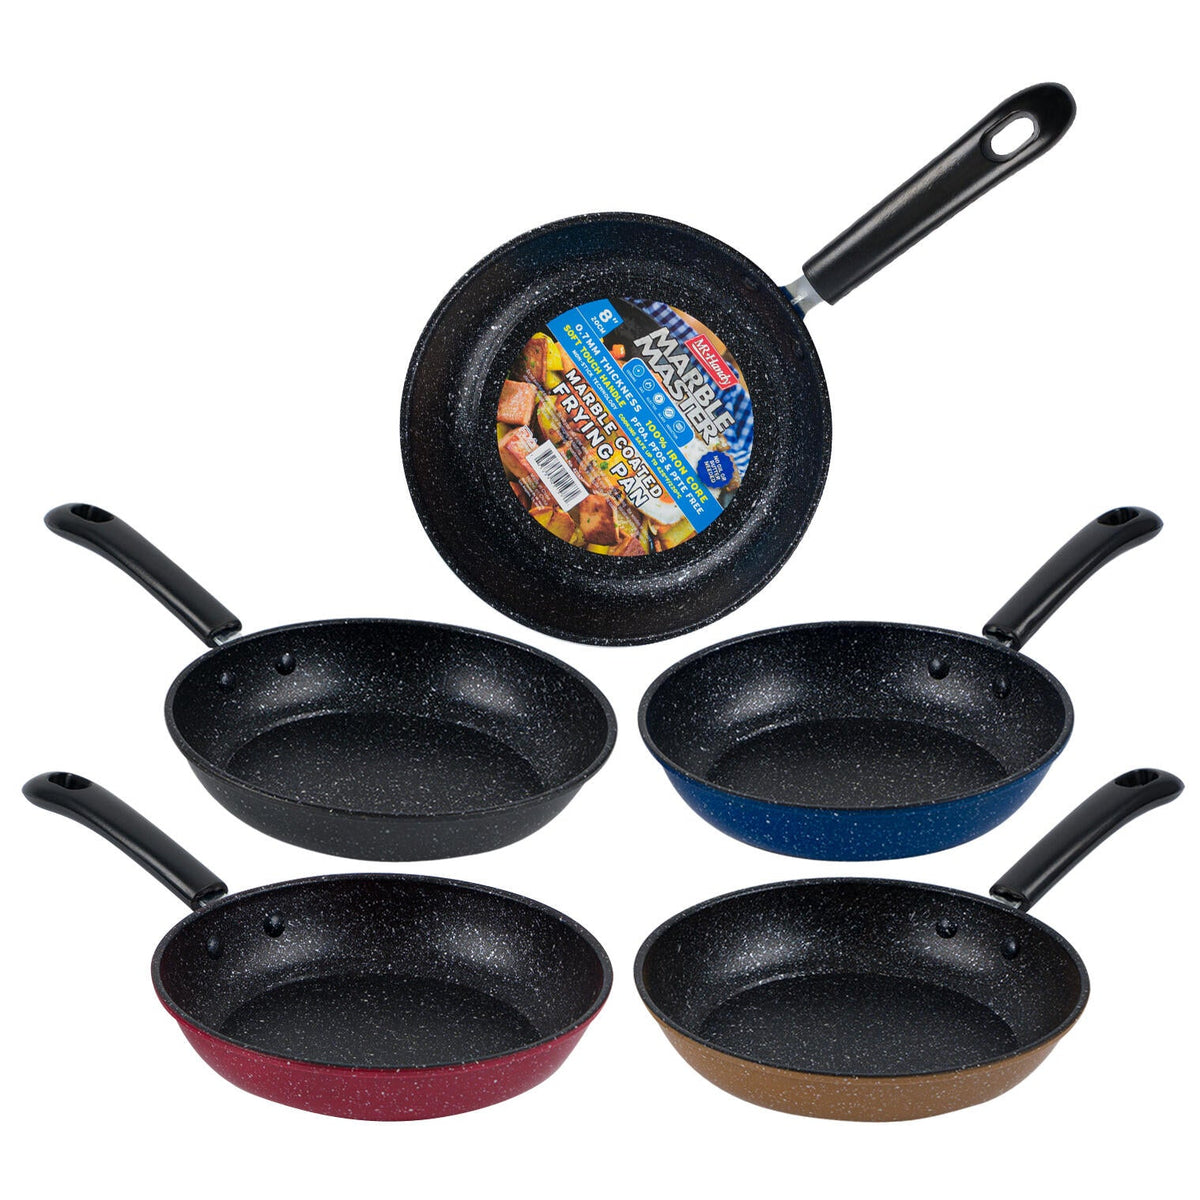 Mr. Handy Marble Coating Frying Pan w/ Colorful Handle - 8